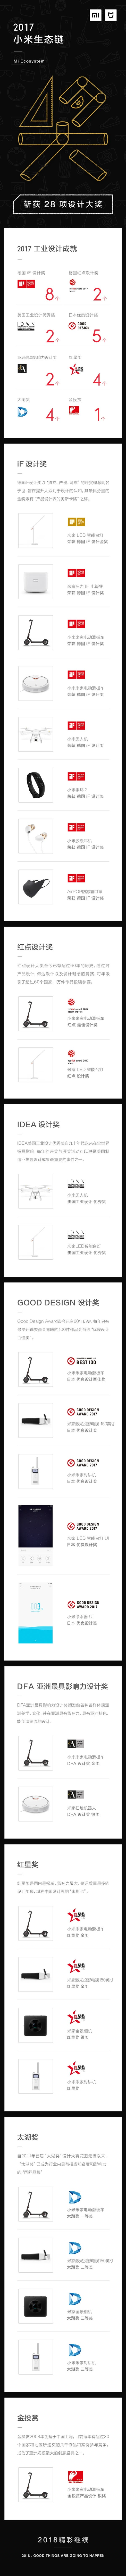 Xiaomi design awards